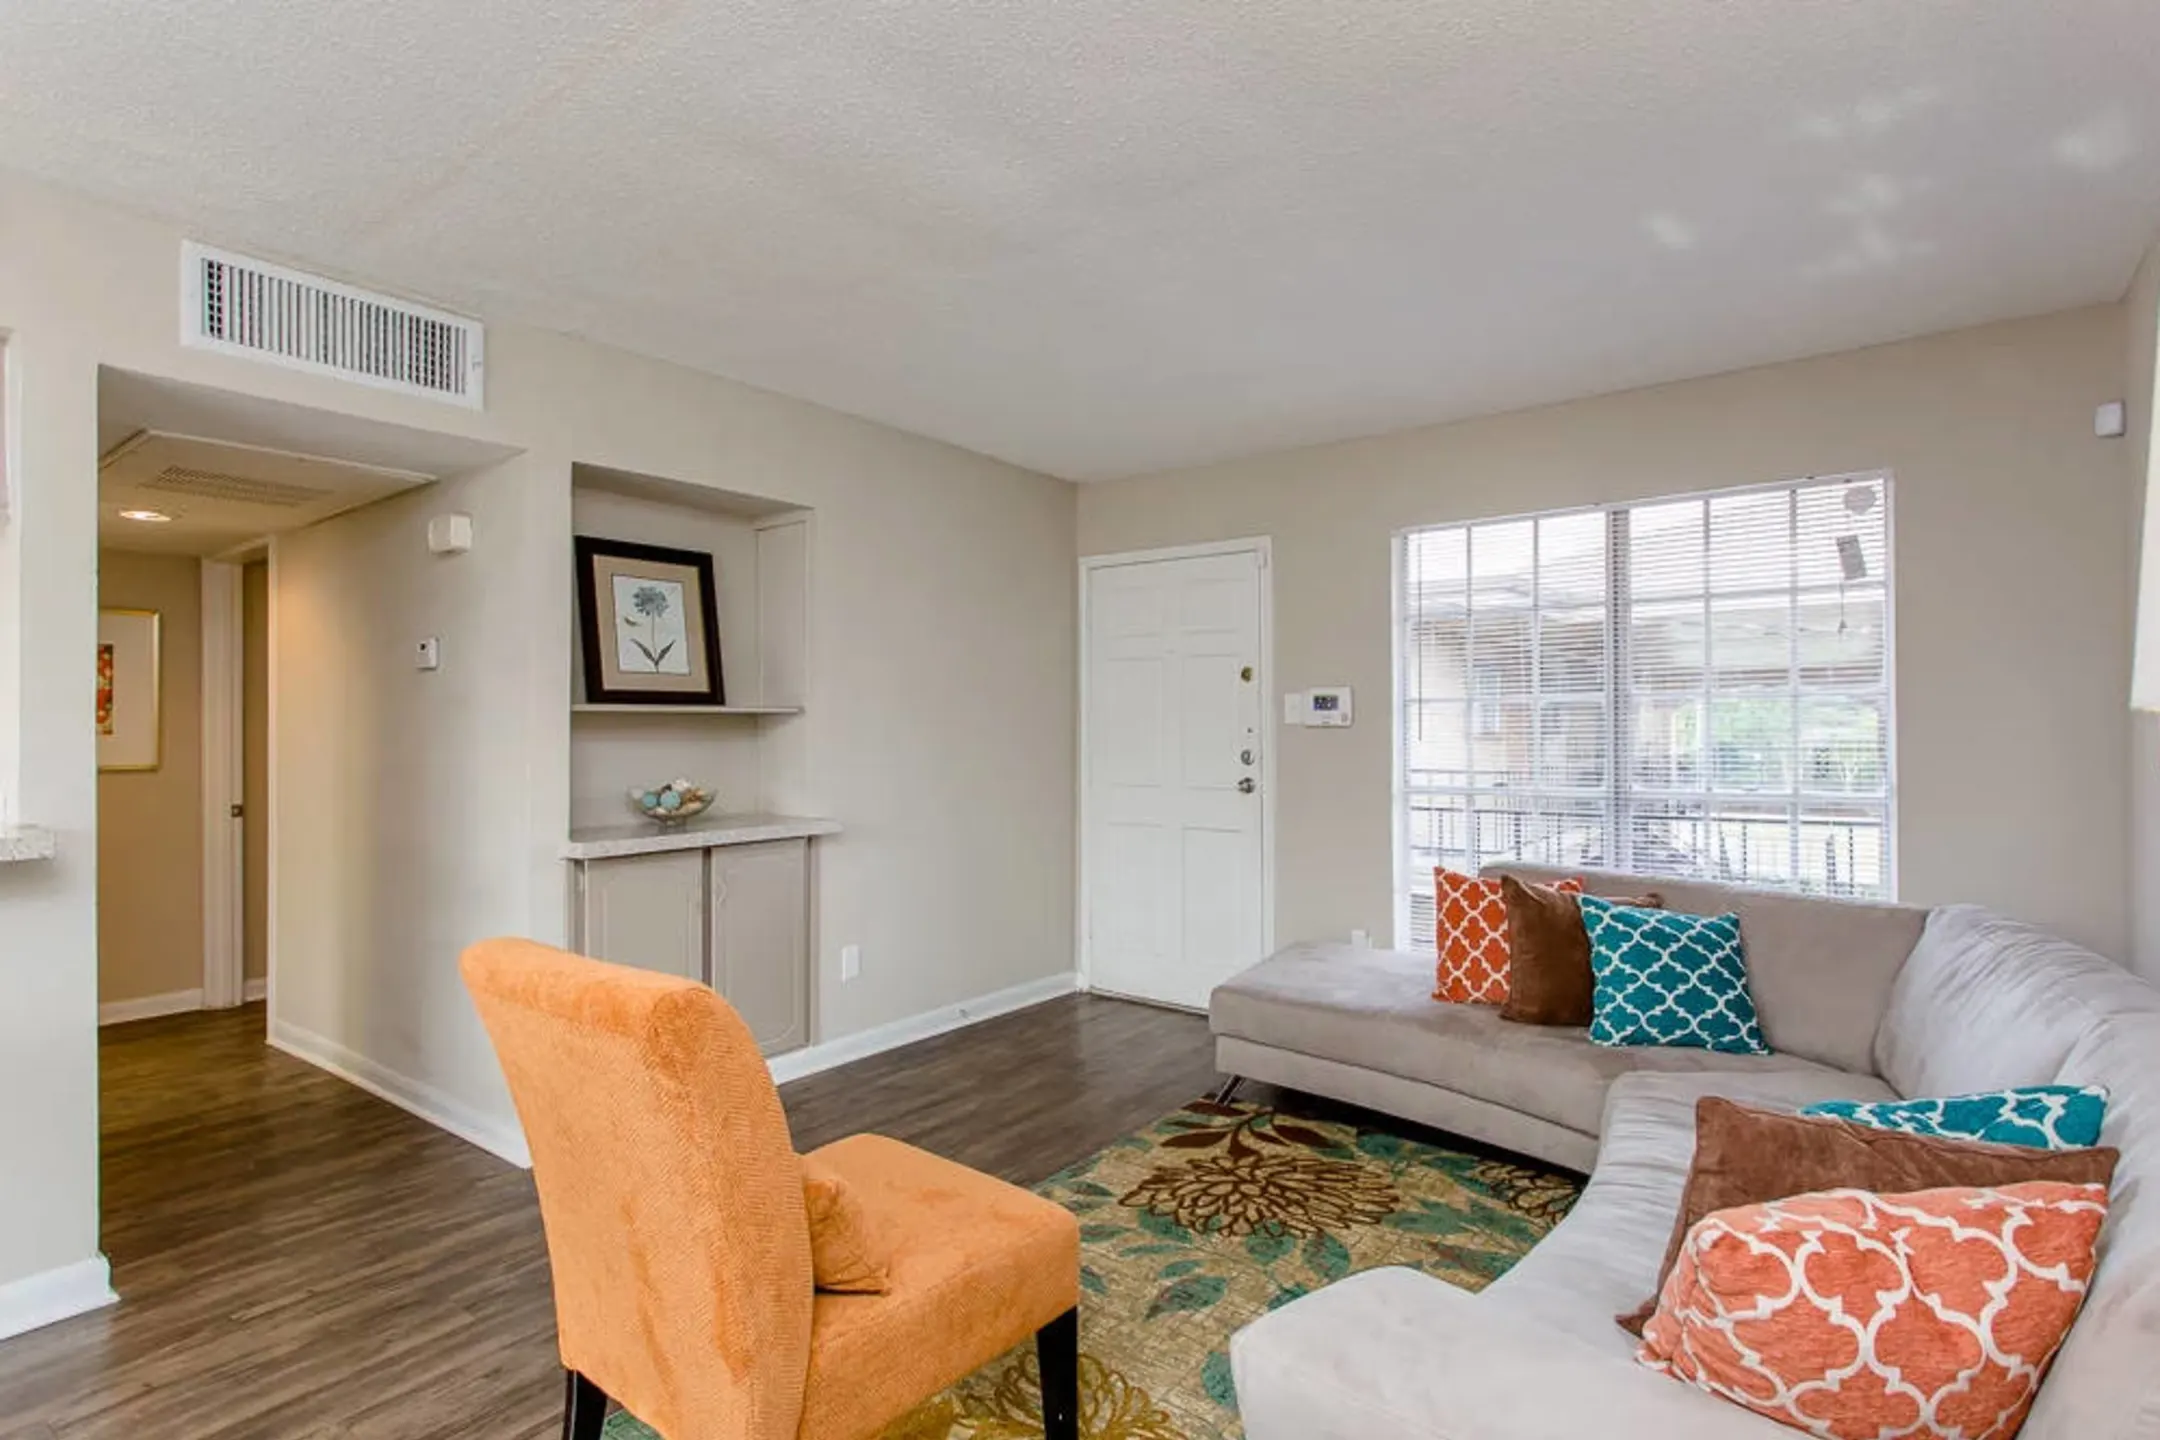 Living Room - 77081 Luxury Properties - Houston, TX